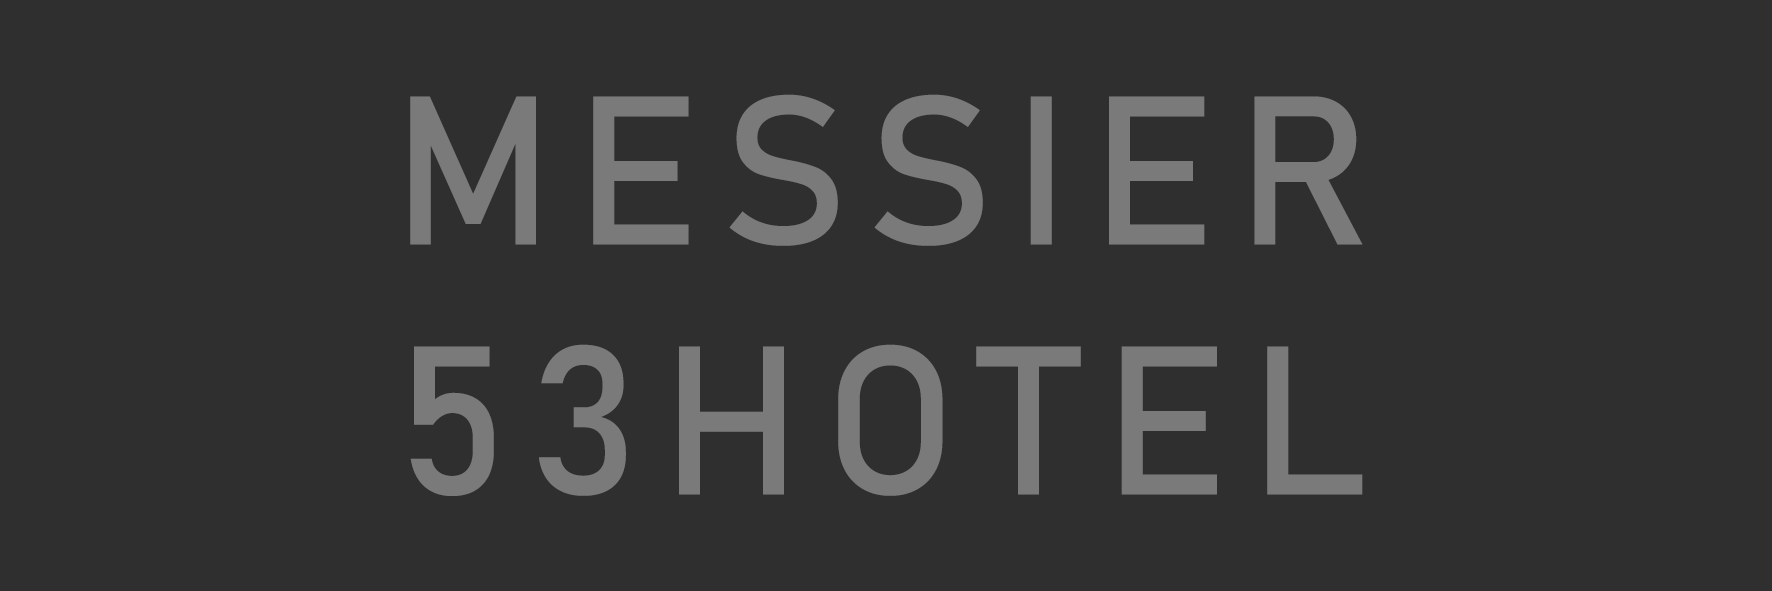 messier 53 hotel